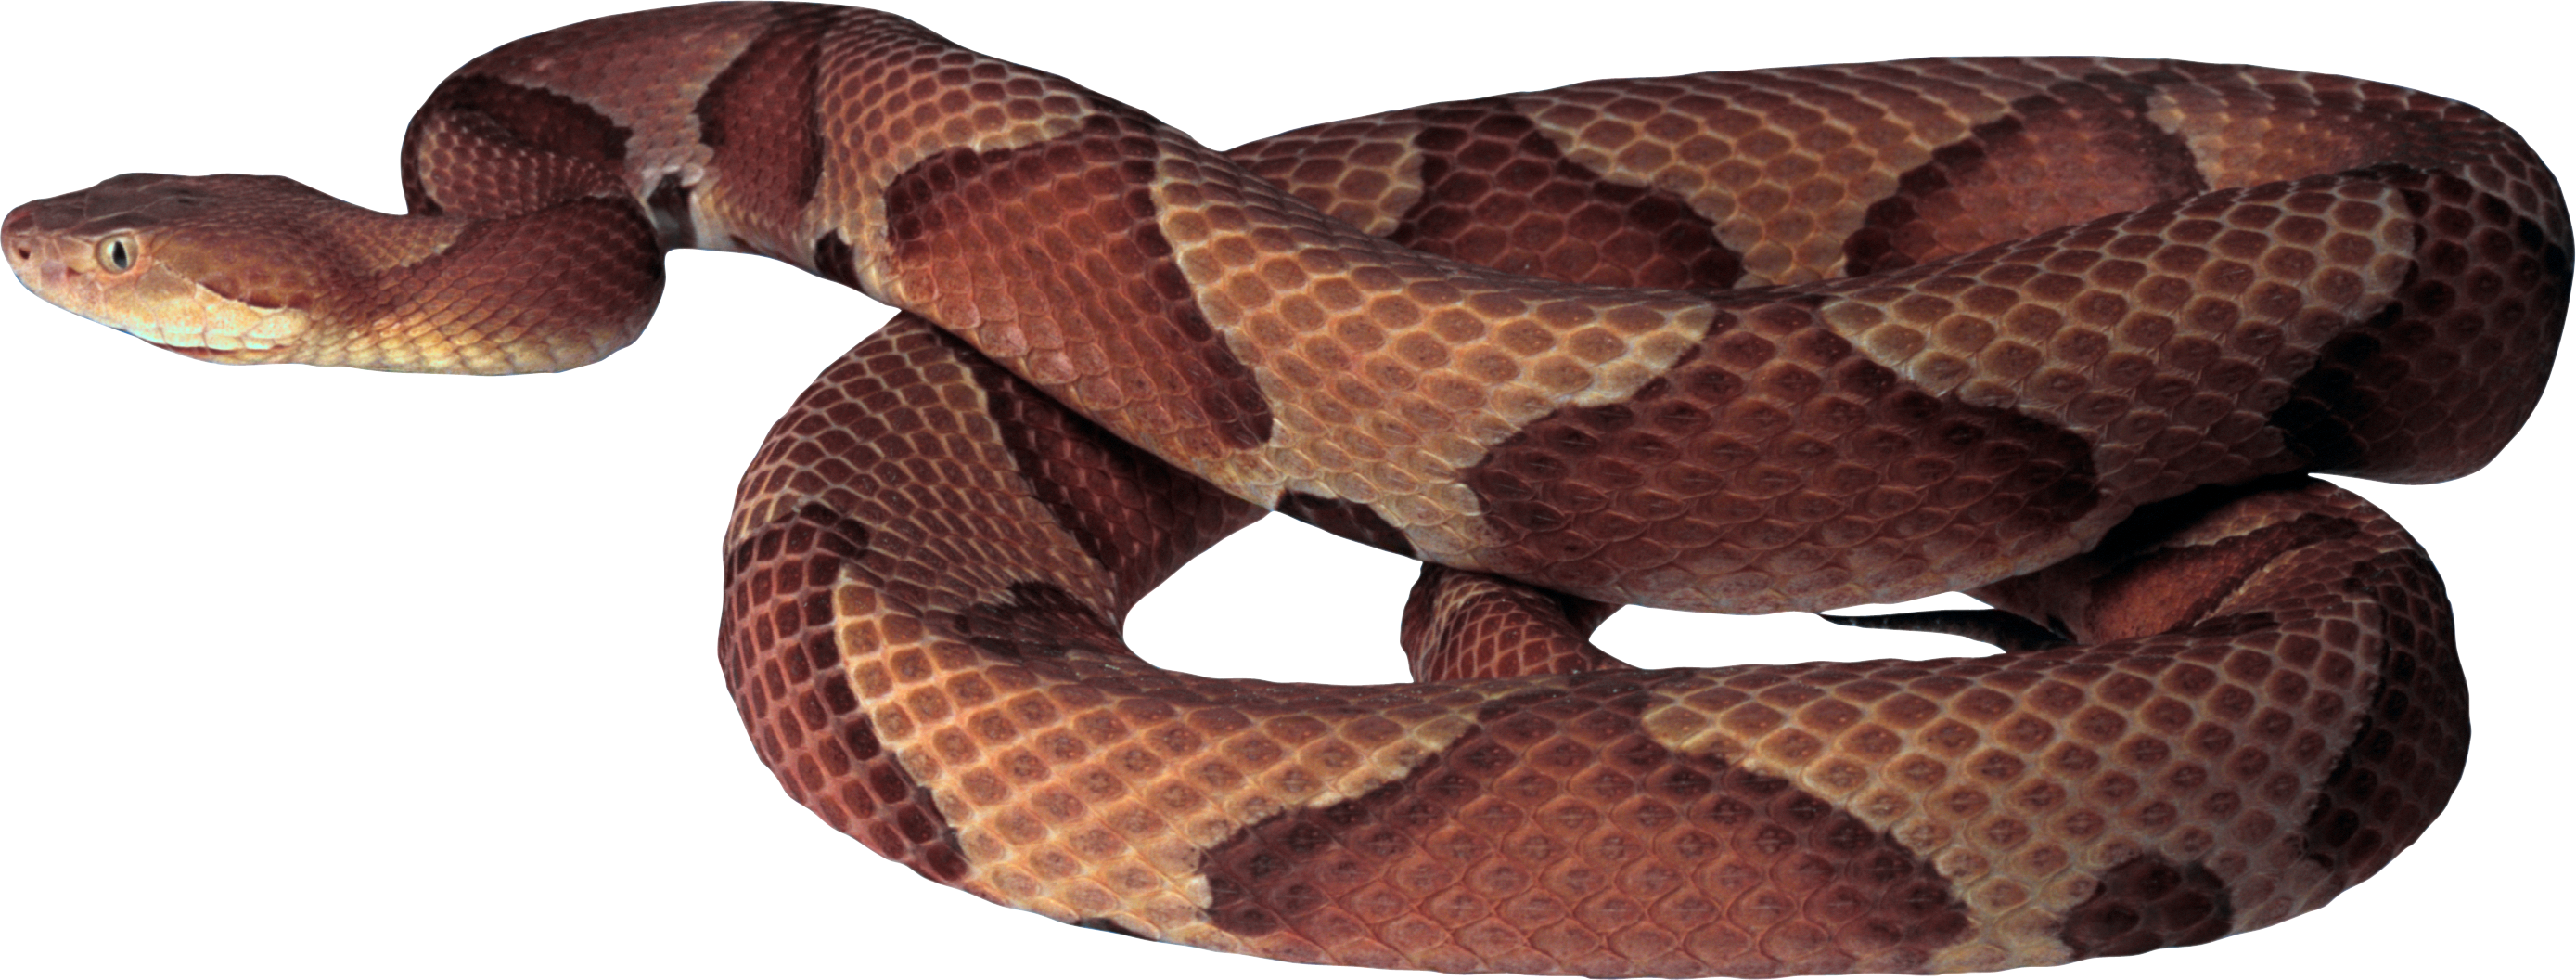 Diamondback Snake PNG Photo